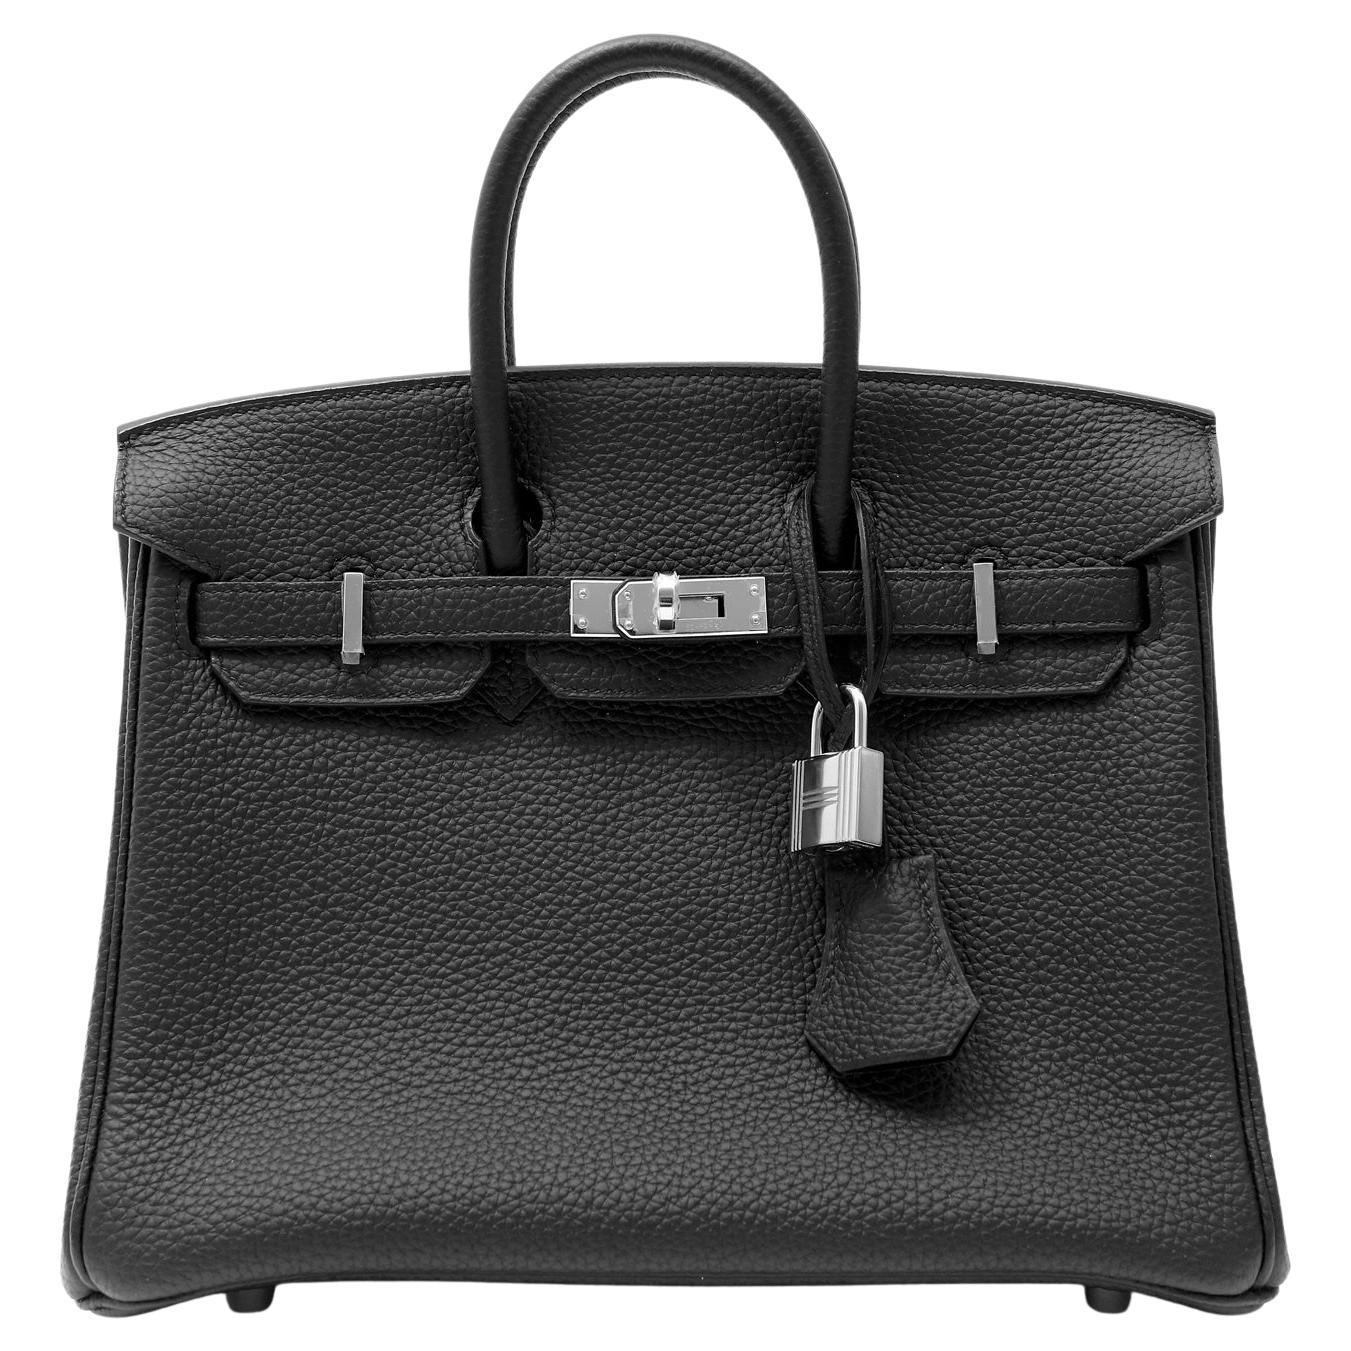 Hermès Black Togo 25 cm Birkin Bag